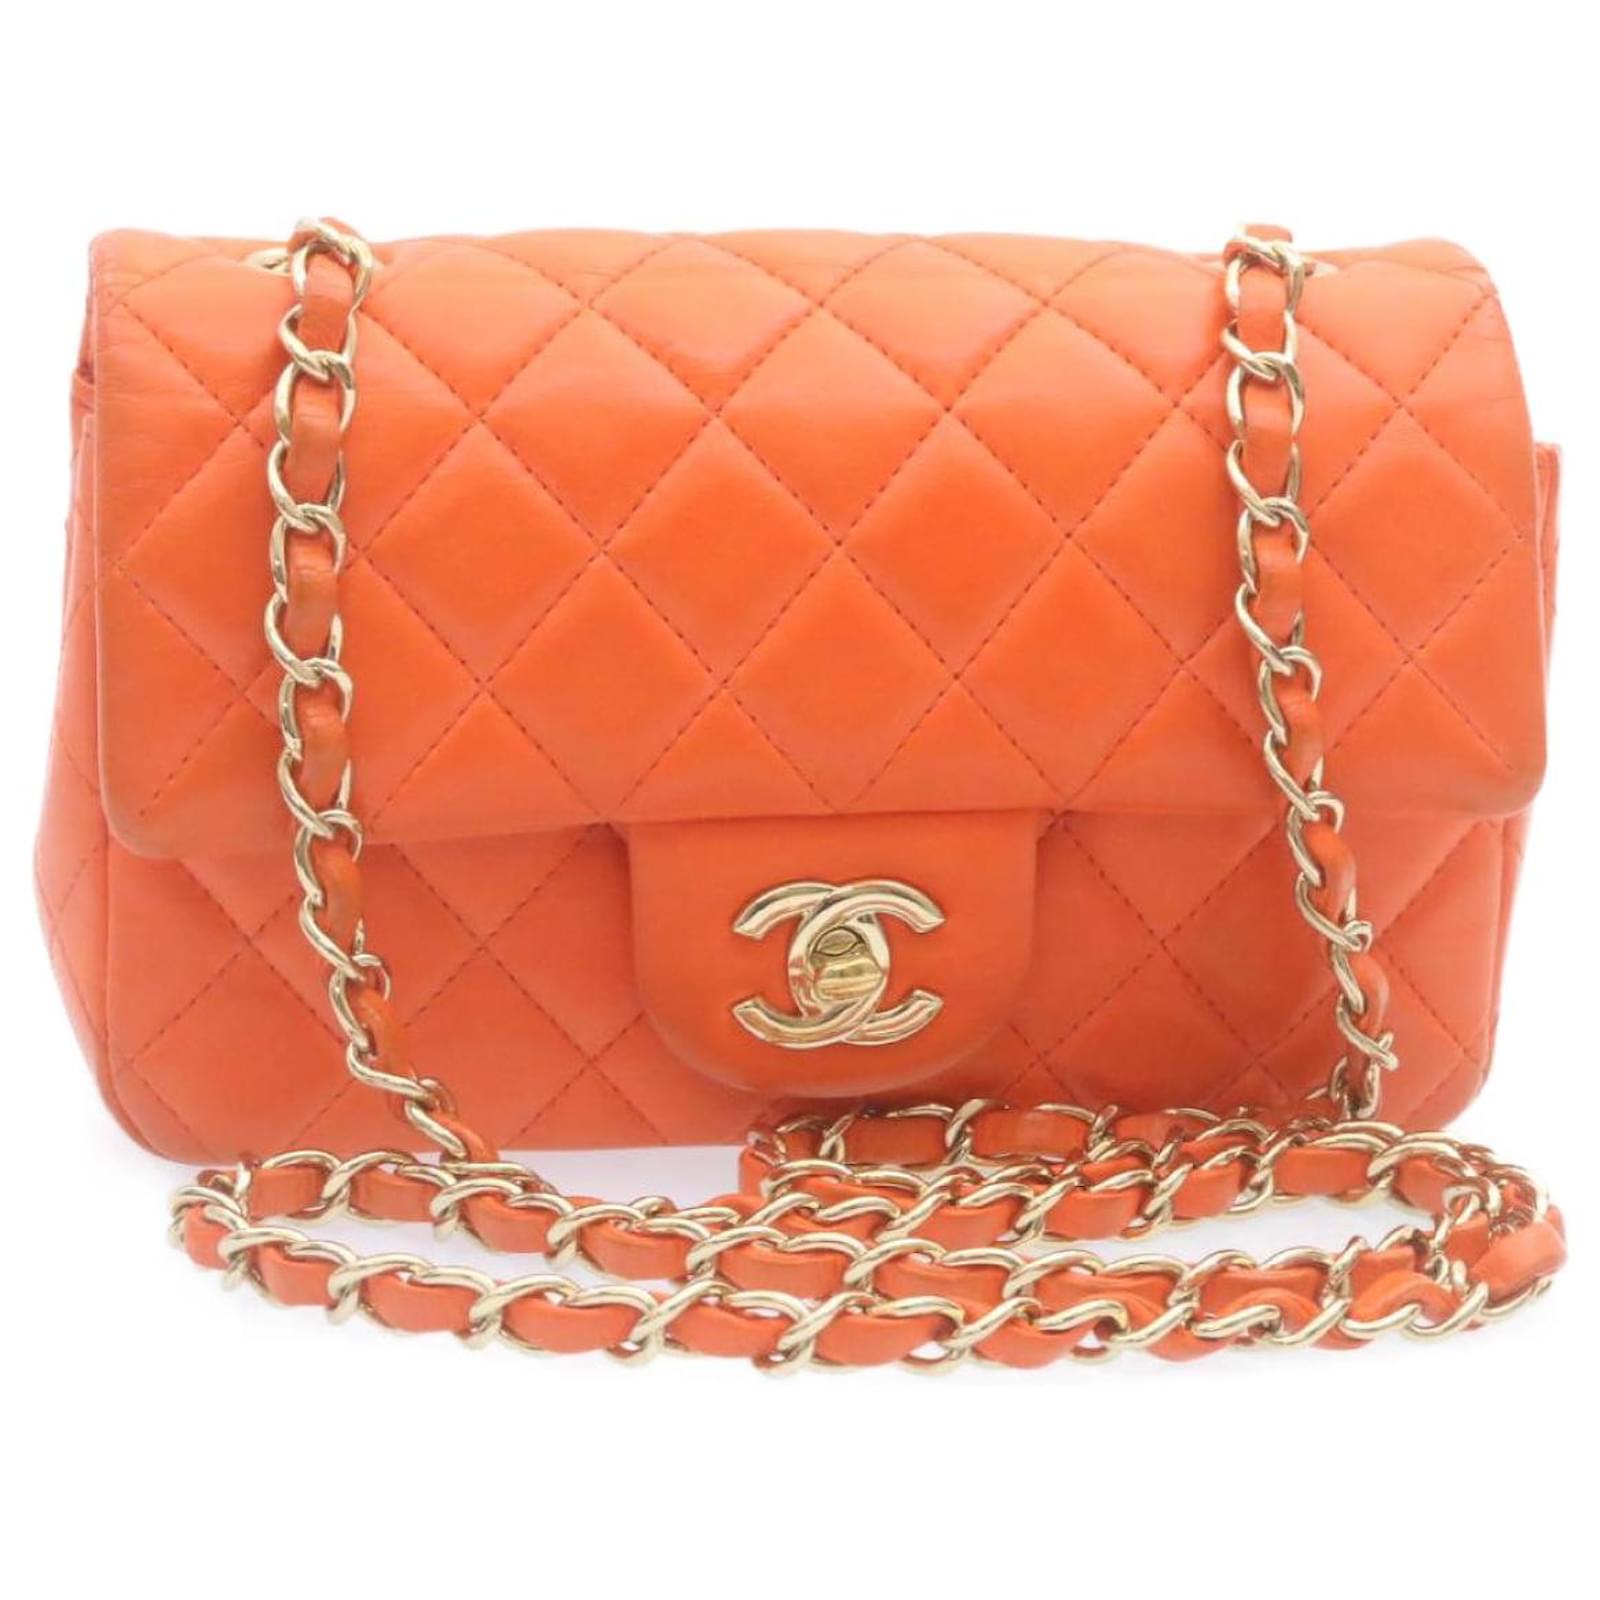 Handbags Chanel Chanel Matelasse Mini Chain Flap Classic Shoulder Bag Lamb Skin Orange CC 29106a